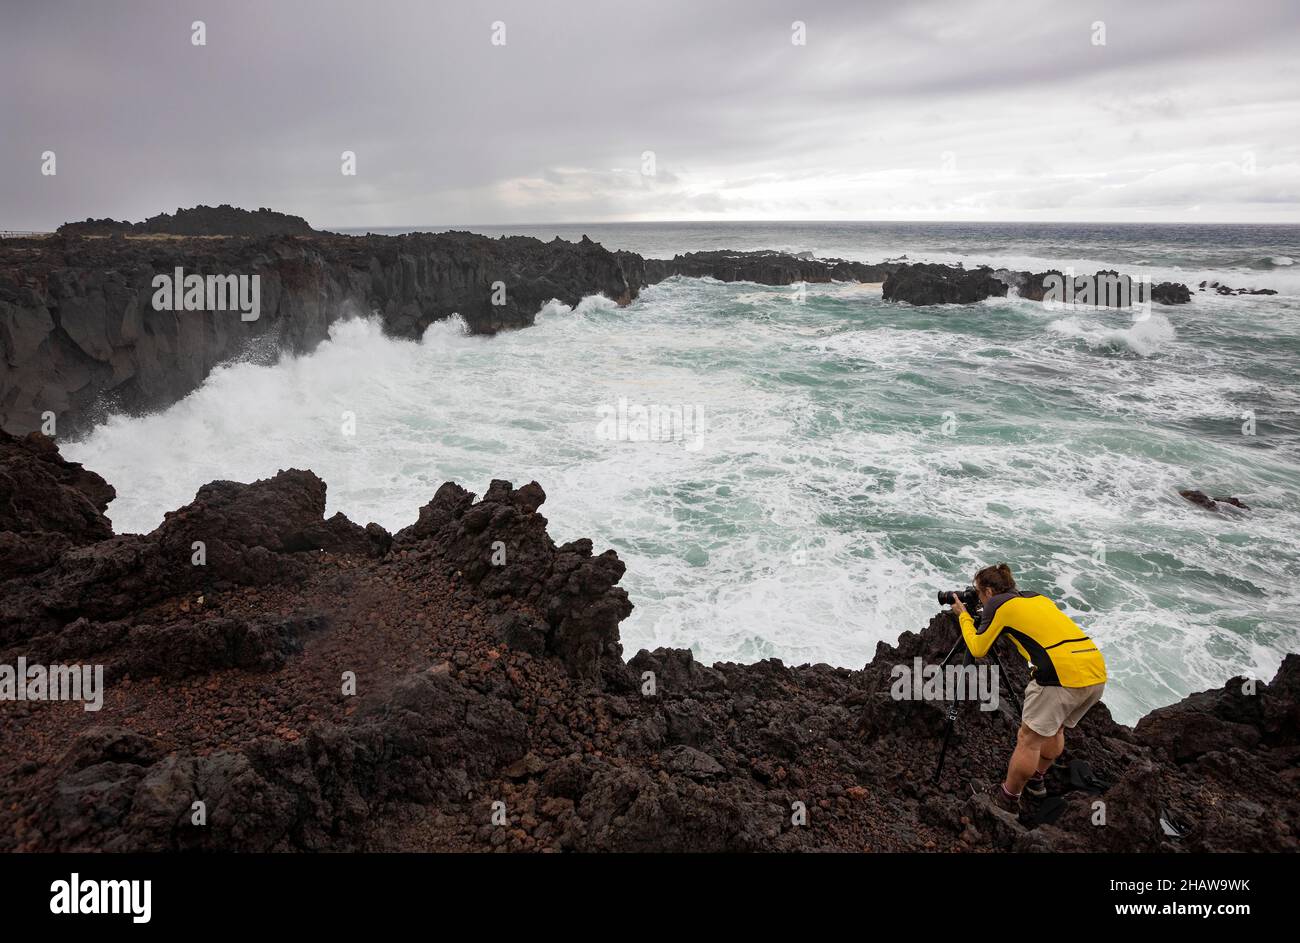 Fotograf auf der vulkanischen Klippe bei Flut mit hohen Wellen, Ponta da Ferraria, Sao Miguel Island, Azoren, Portugal Stockfoto